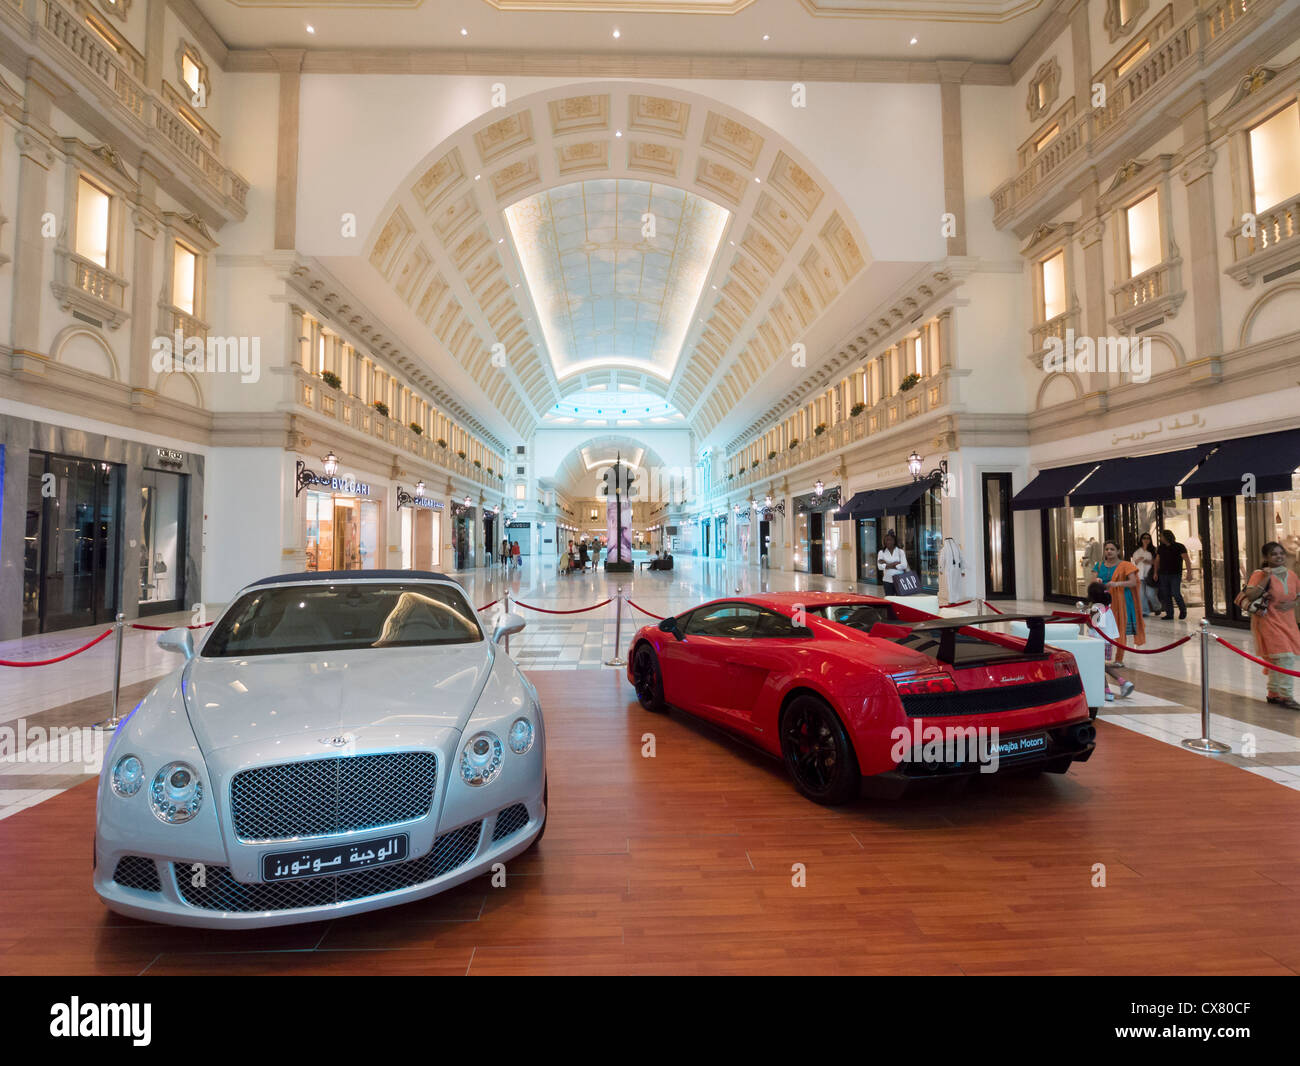 Luxury cars on display at interior of upmarket Villaggio shopping mall in Doha Qatar Stock Photo